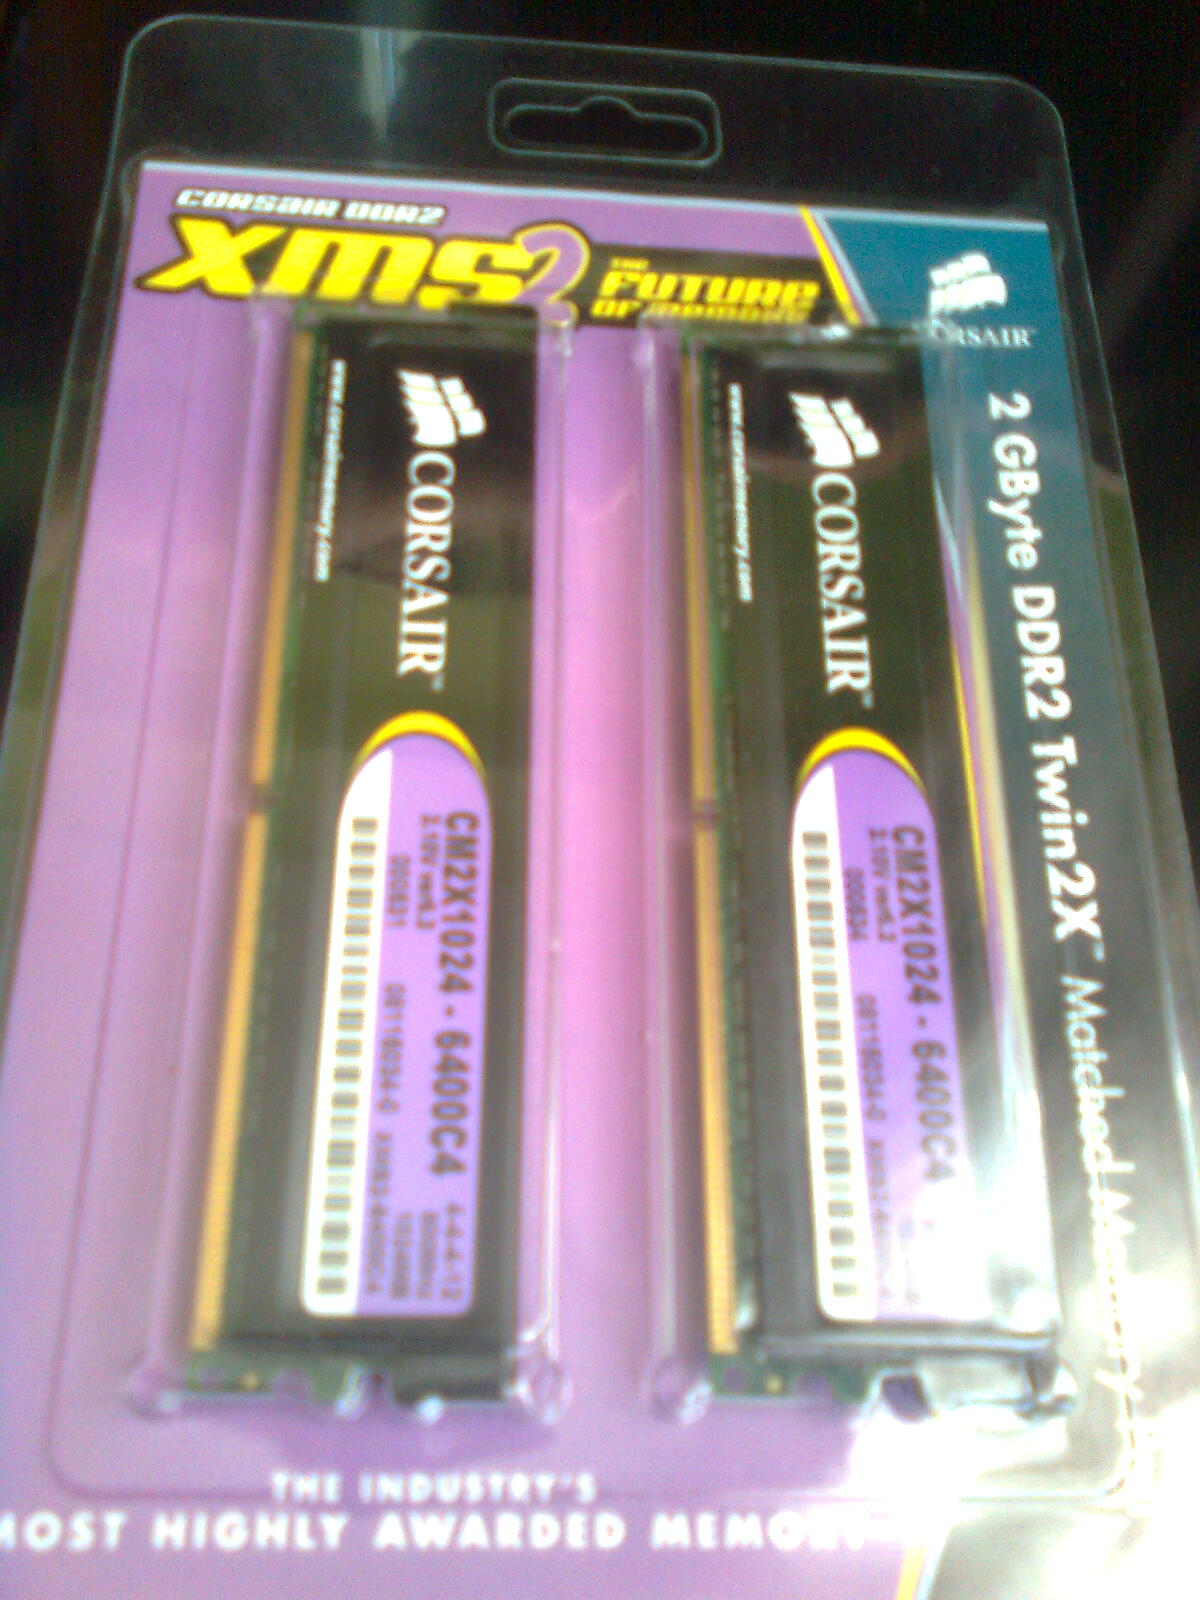  Corsair DDR2 4-4-4-12 800mhz 2x1GB Kit